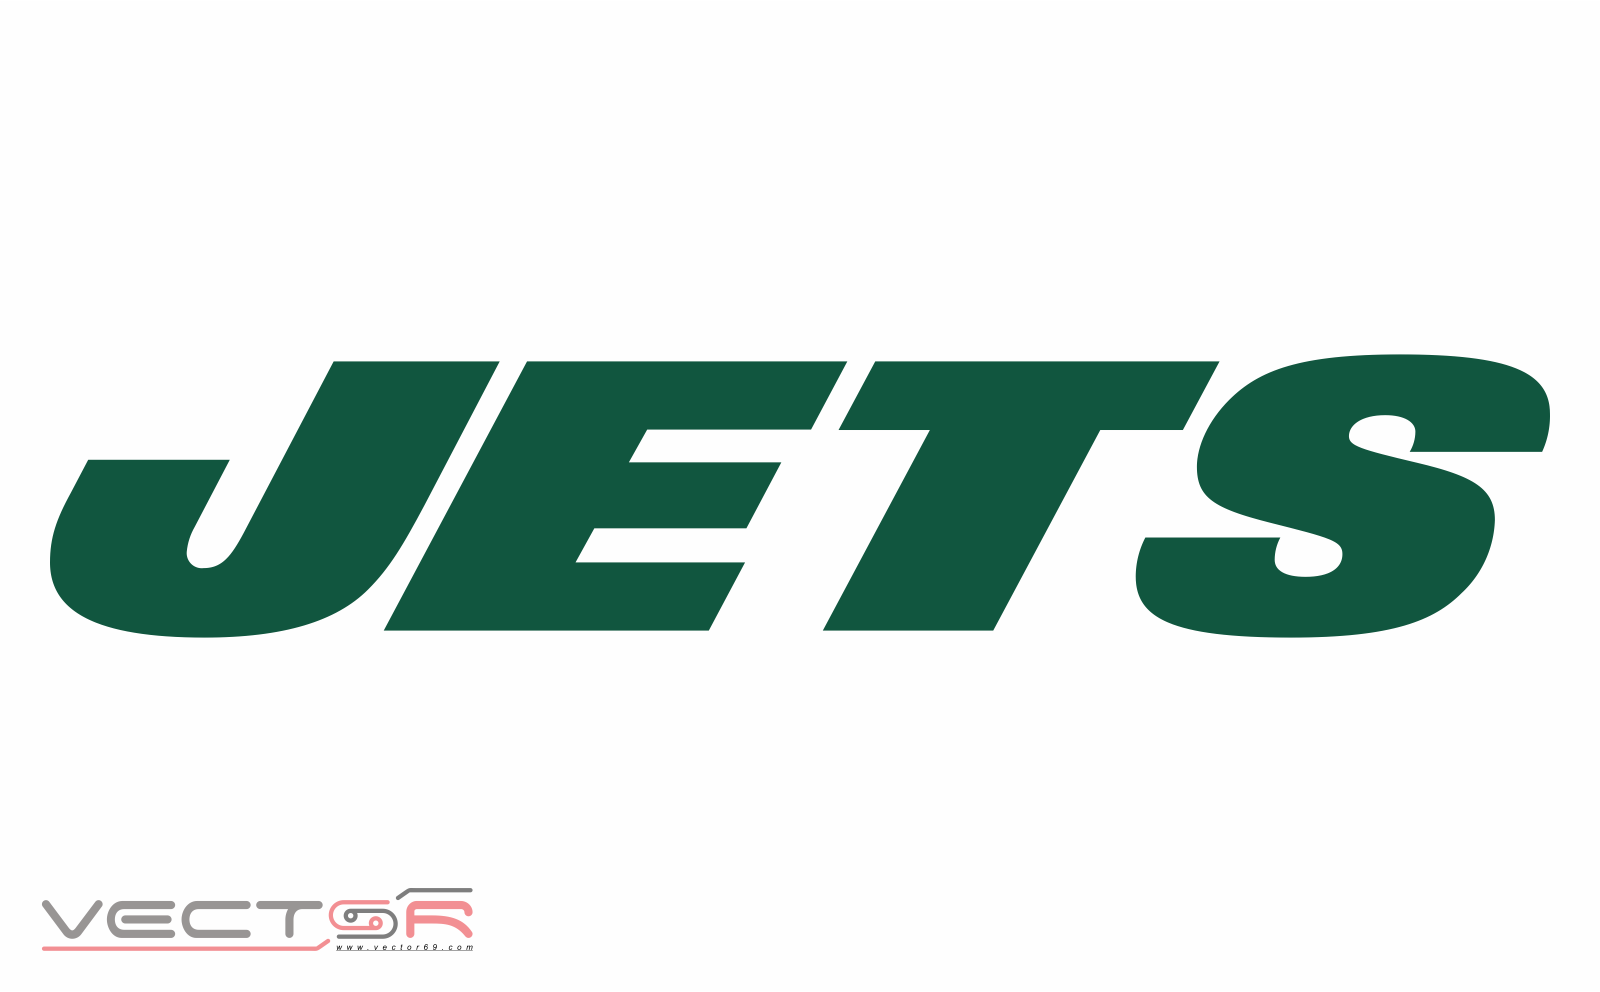 New York Jets Wordmark - Download Transparent Images, Portable Network Graphics (.PNG)